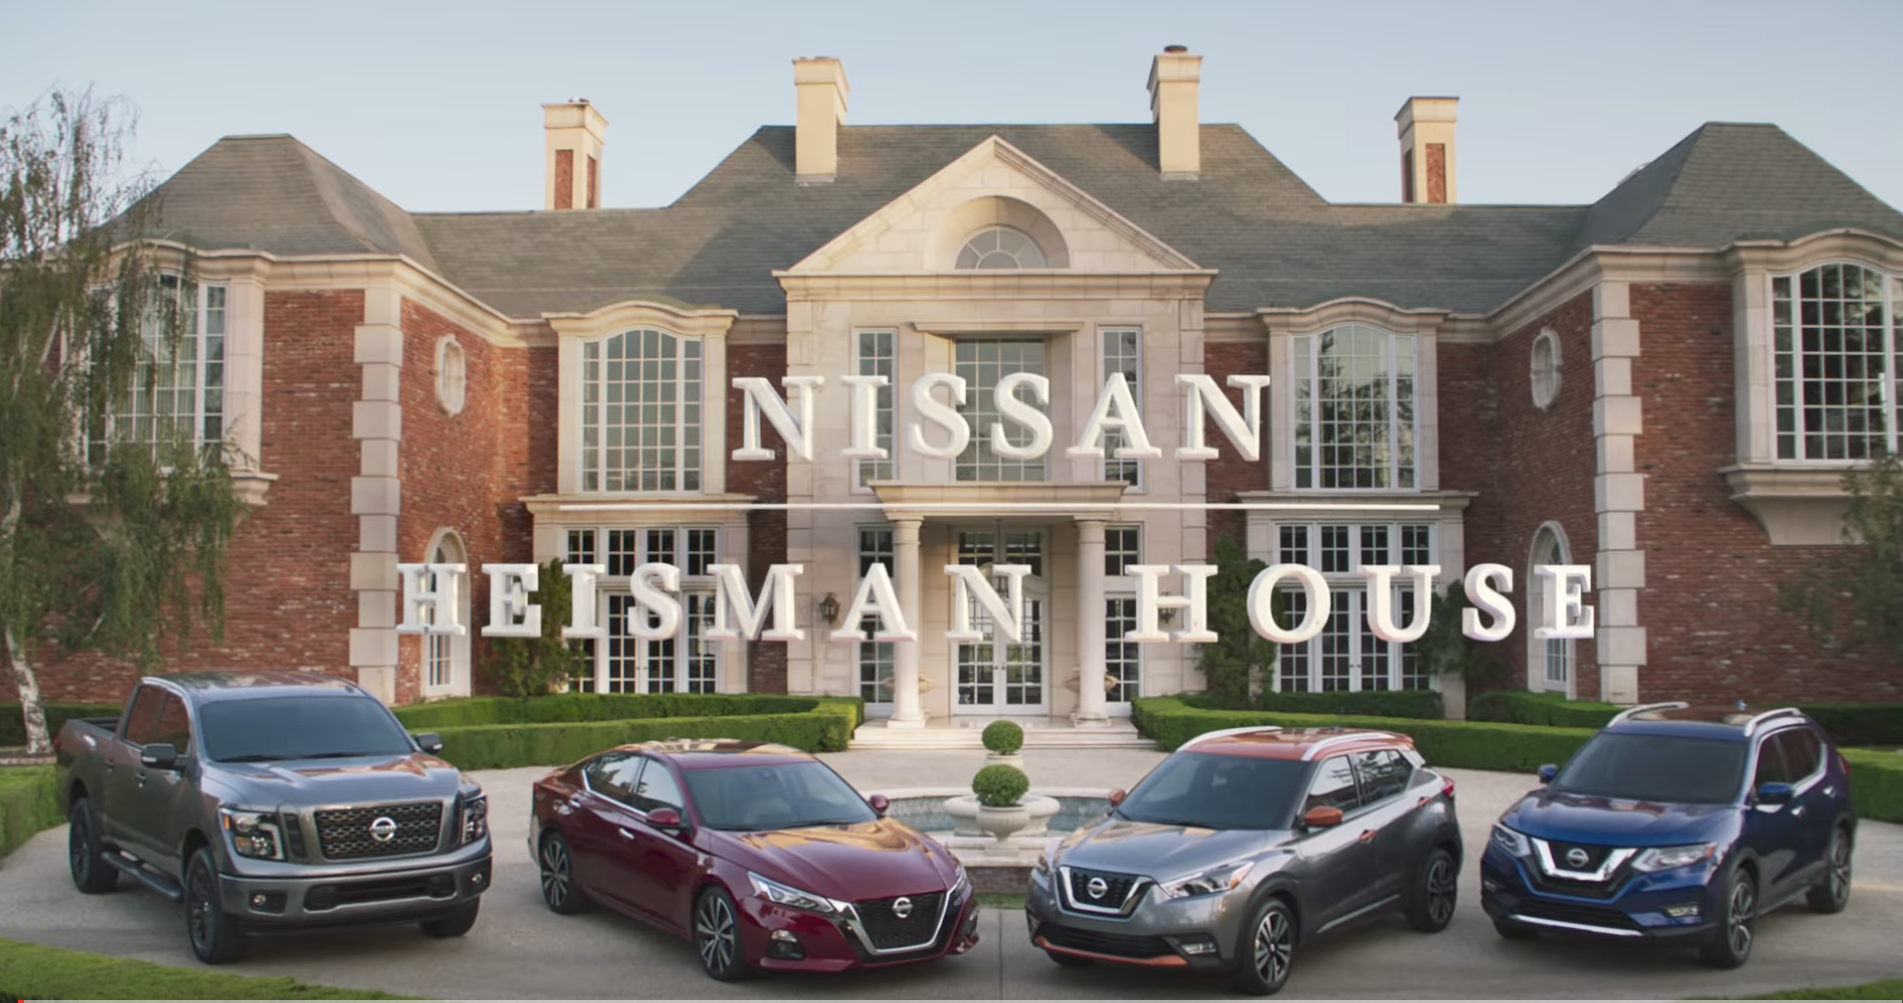 Check out the latest Nissan Heisman House video | Heisman